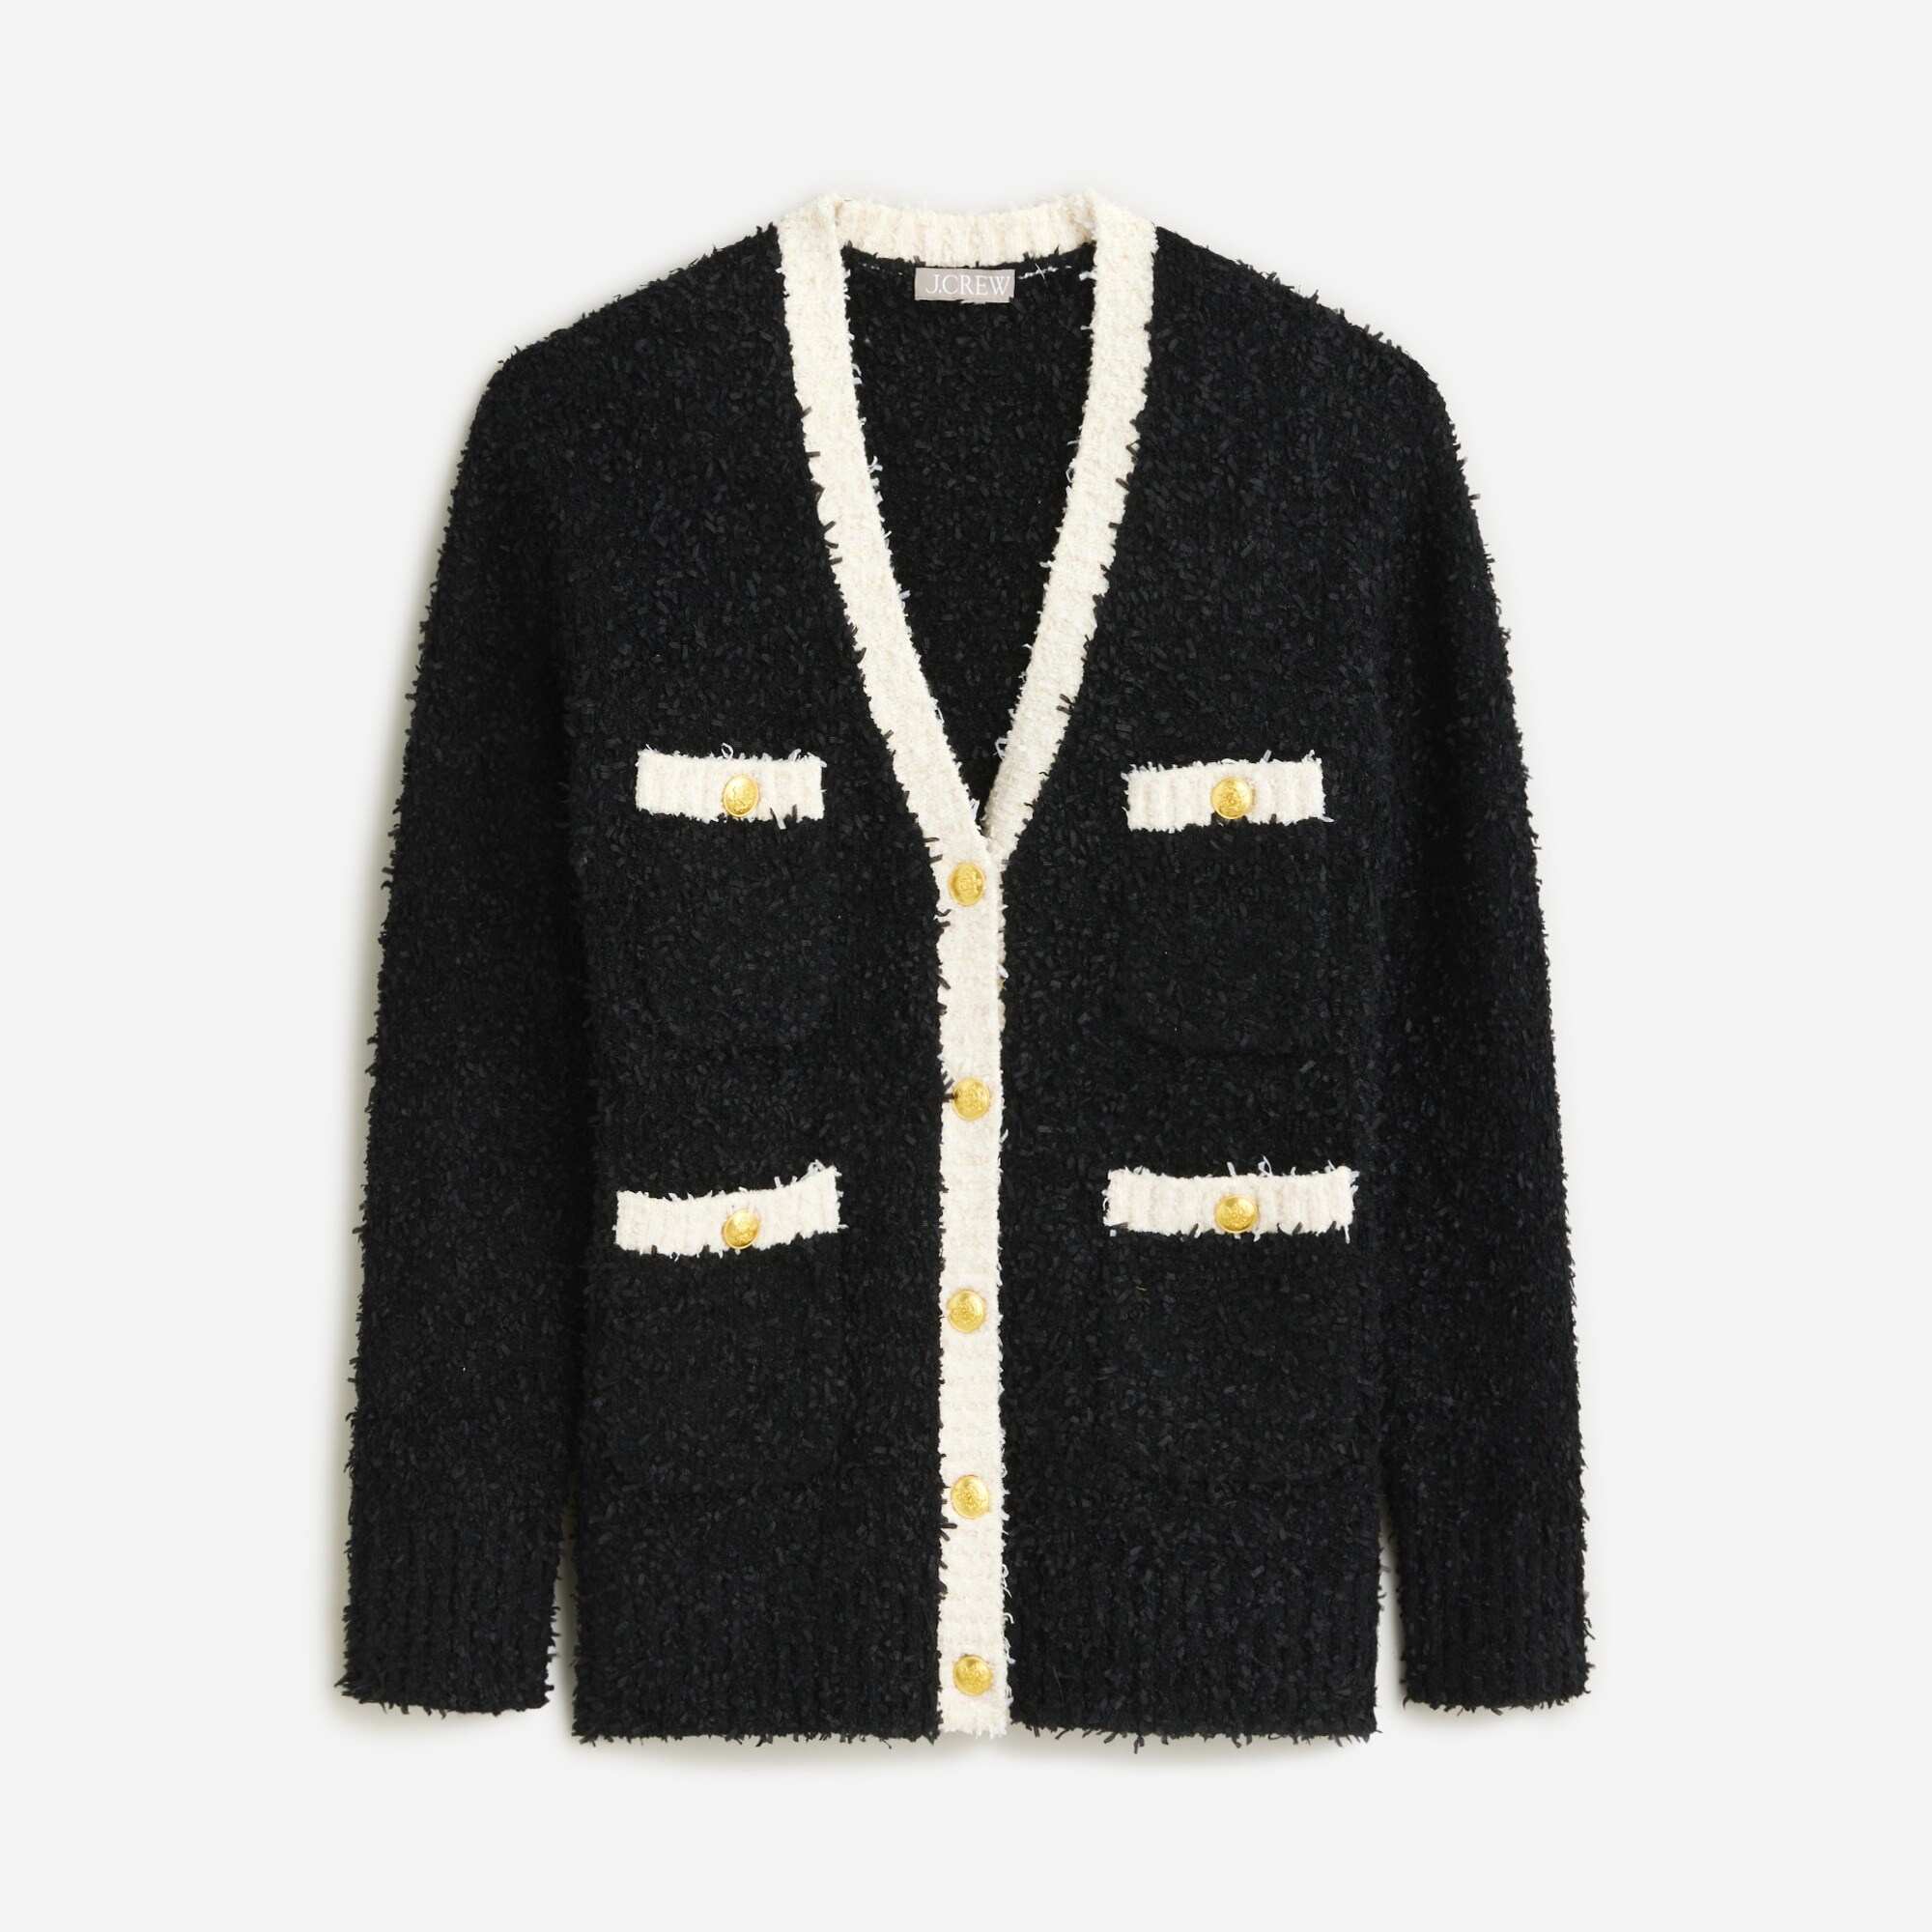  Longer sweater lady jacket in textured contrast yarn